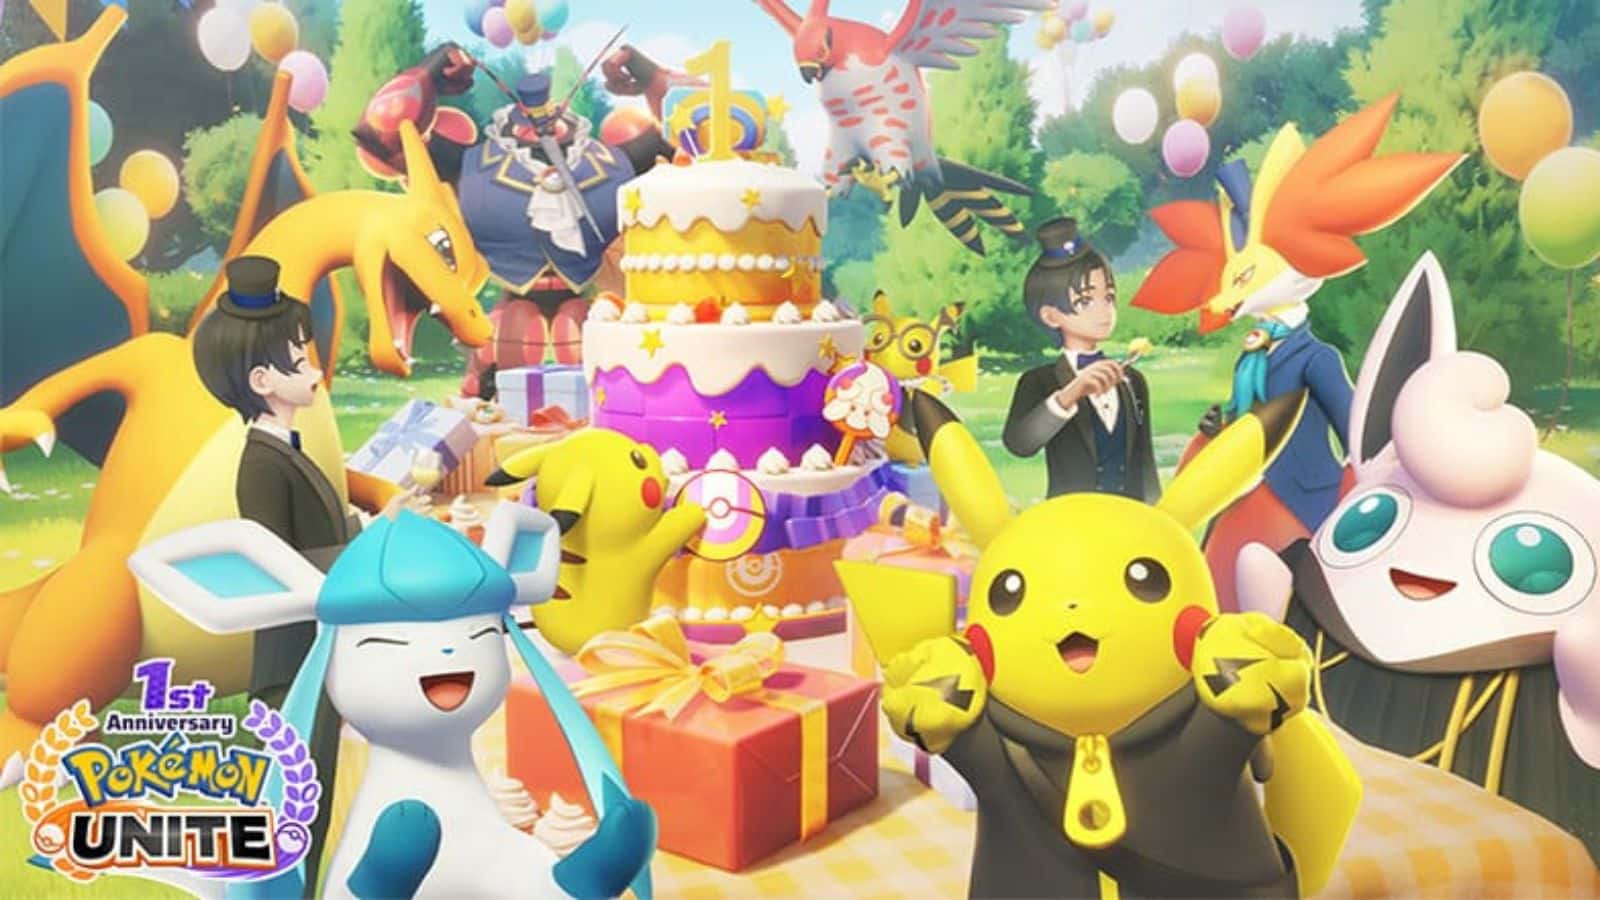 pokemon unite first anniversary event header image